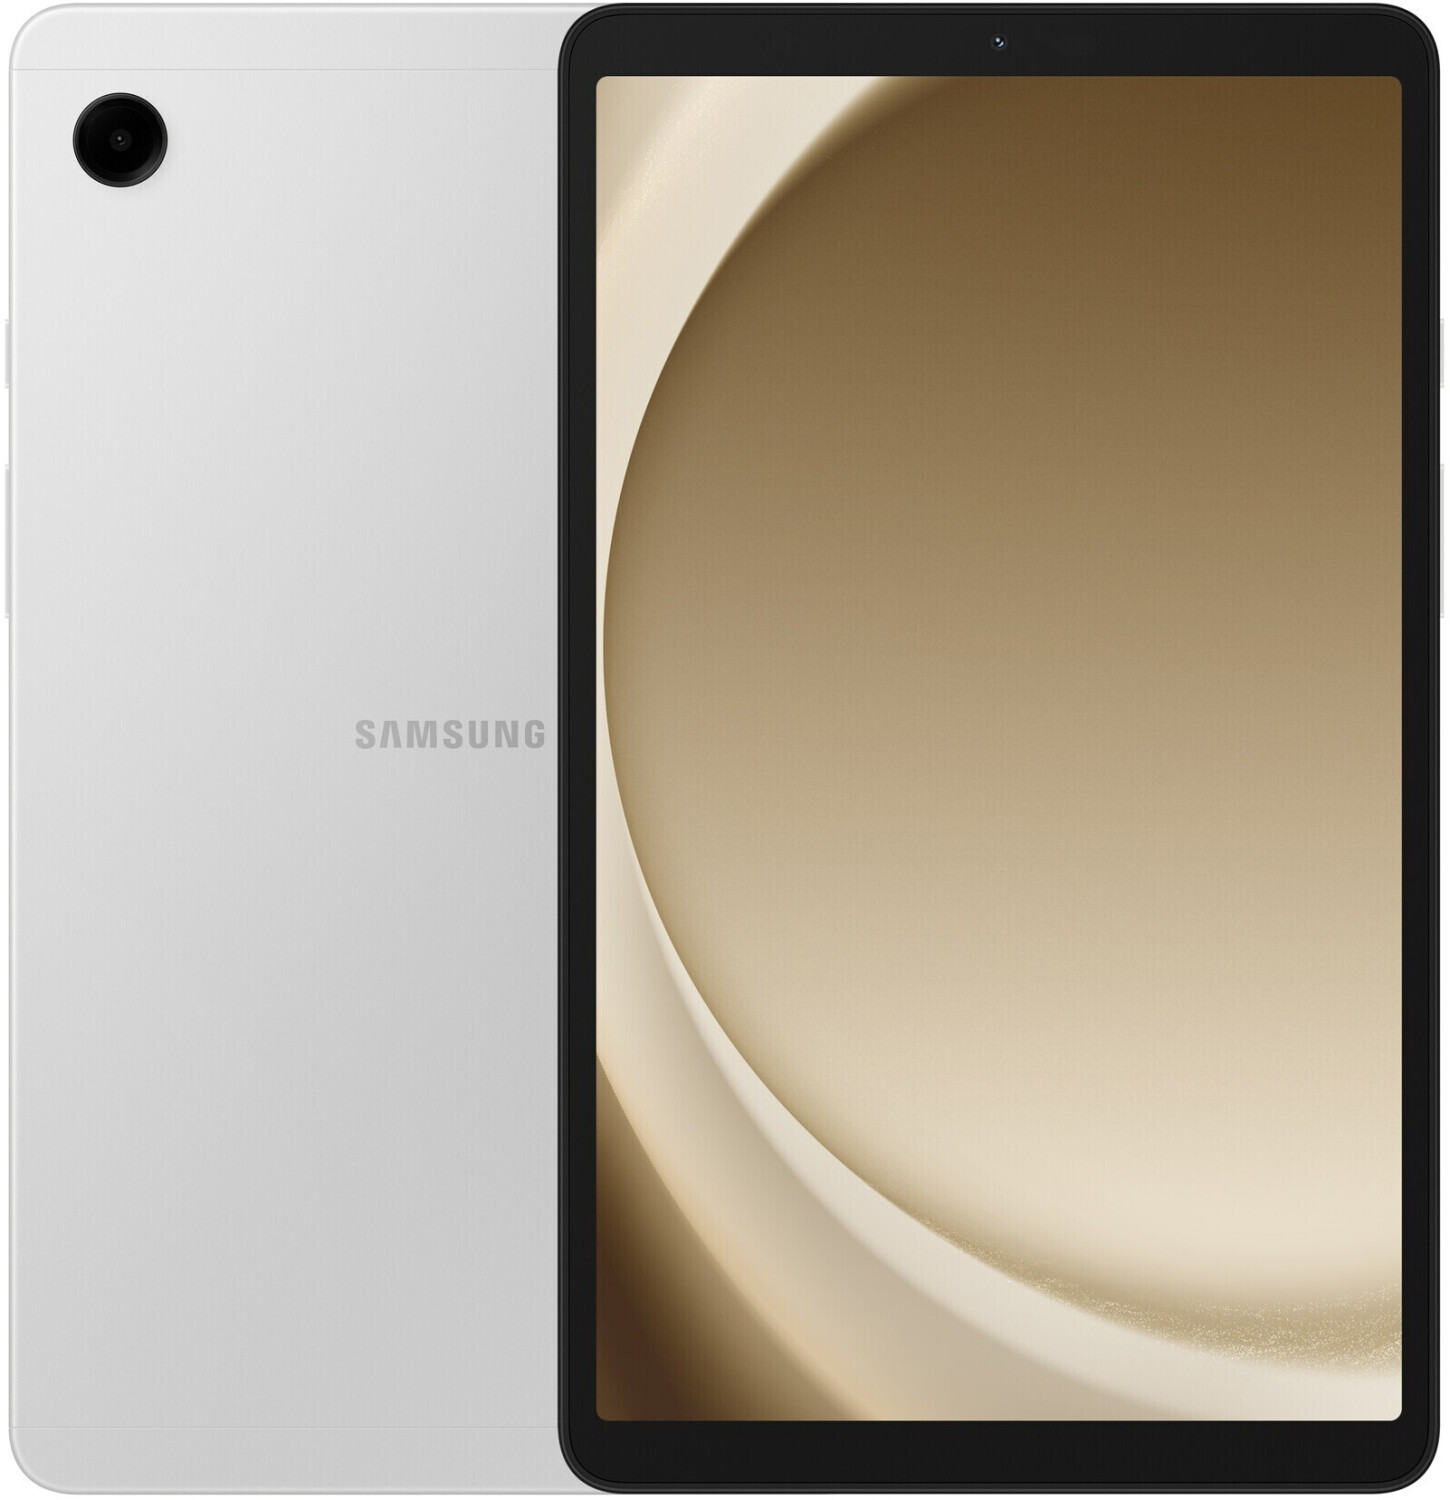 Soldes Samsung Galaxy Tab A9 2024 au meilleur prix sur